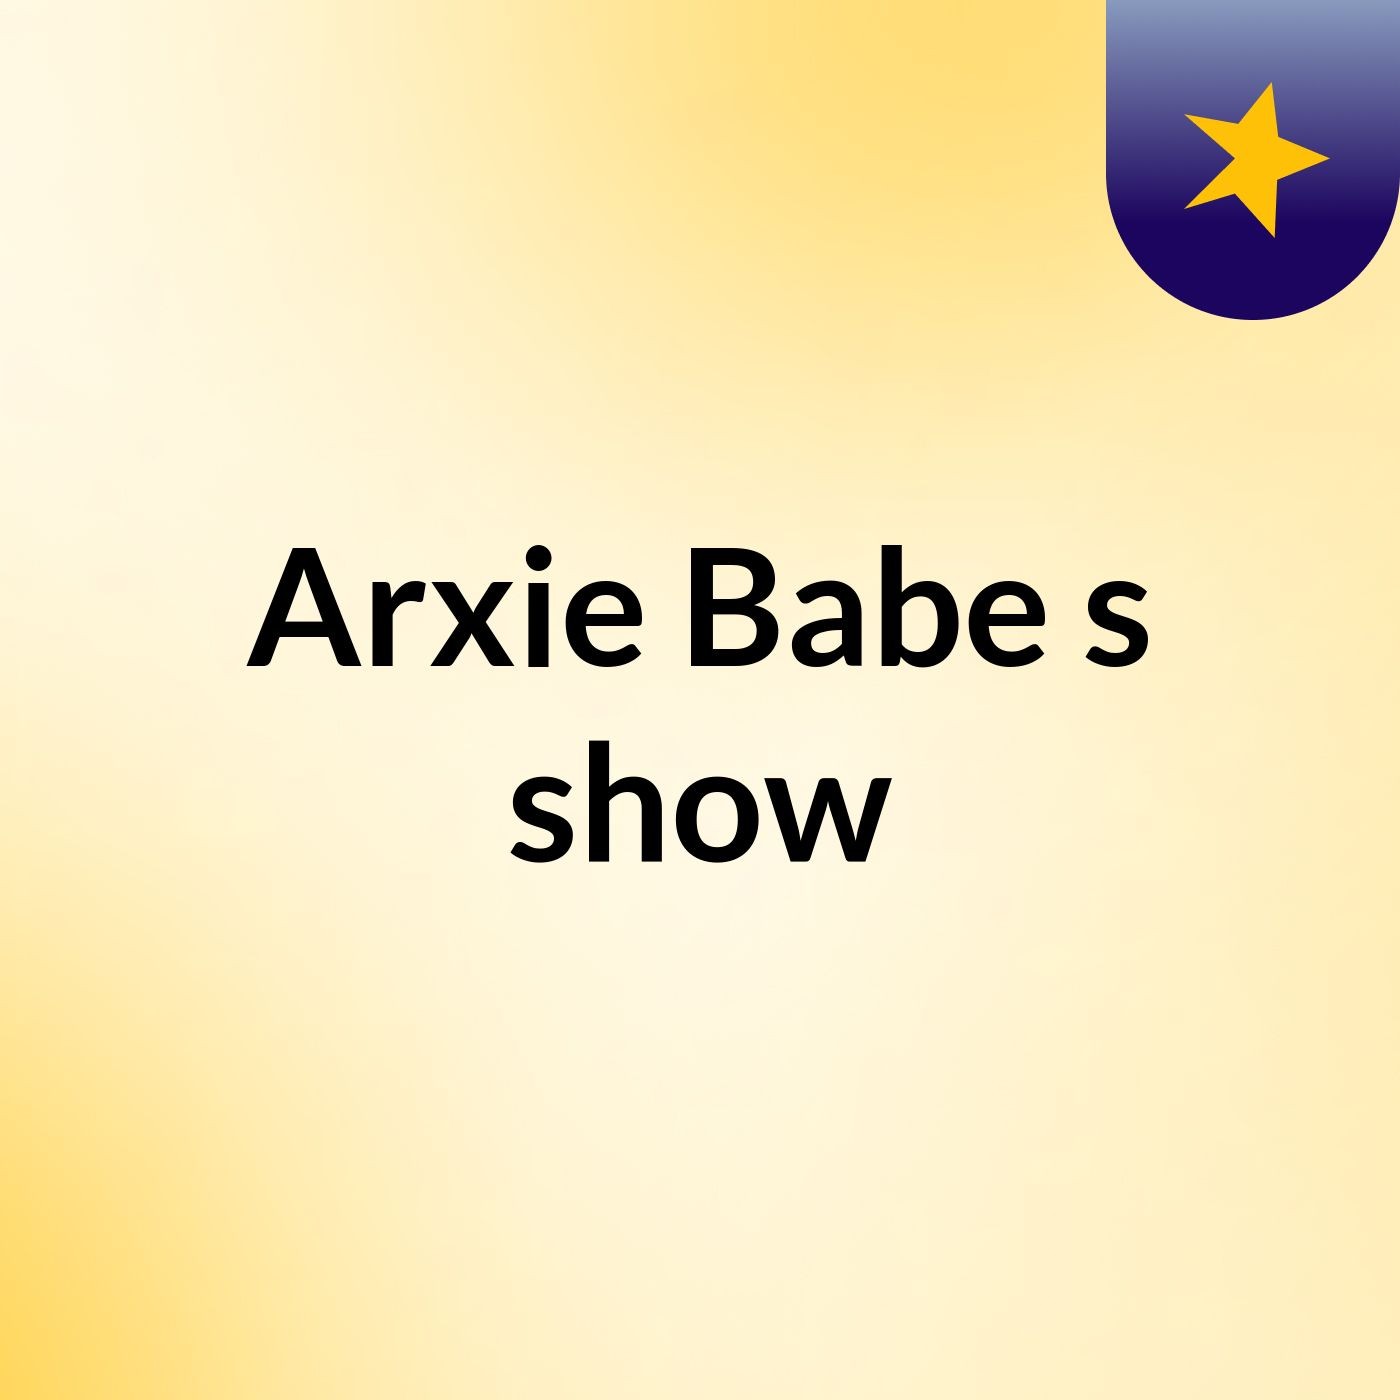 Arxie Babe's show